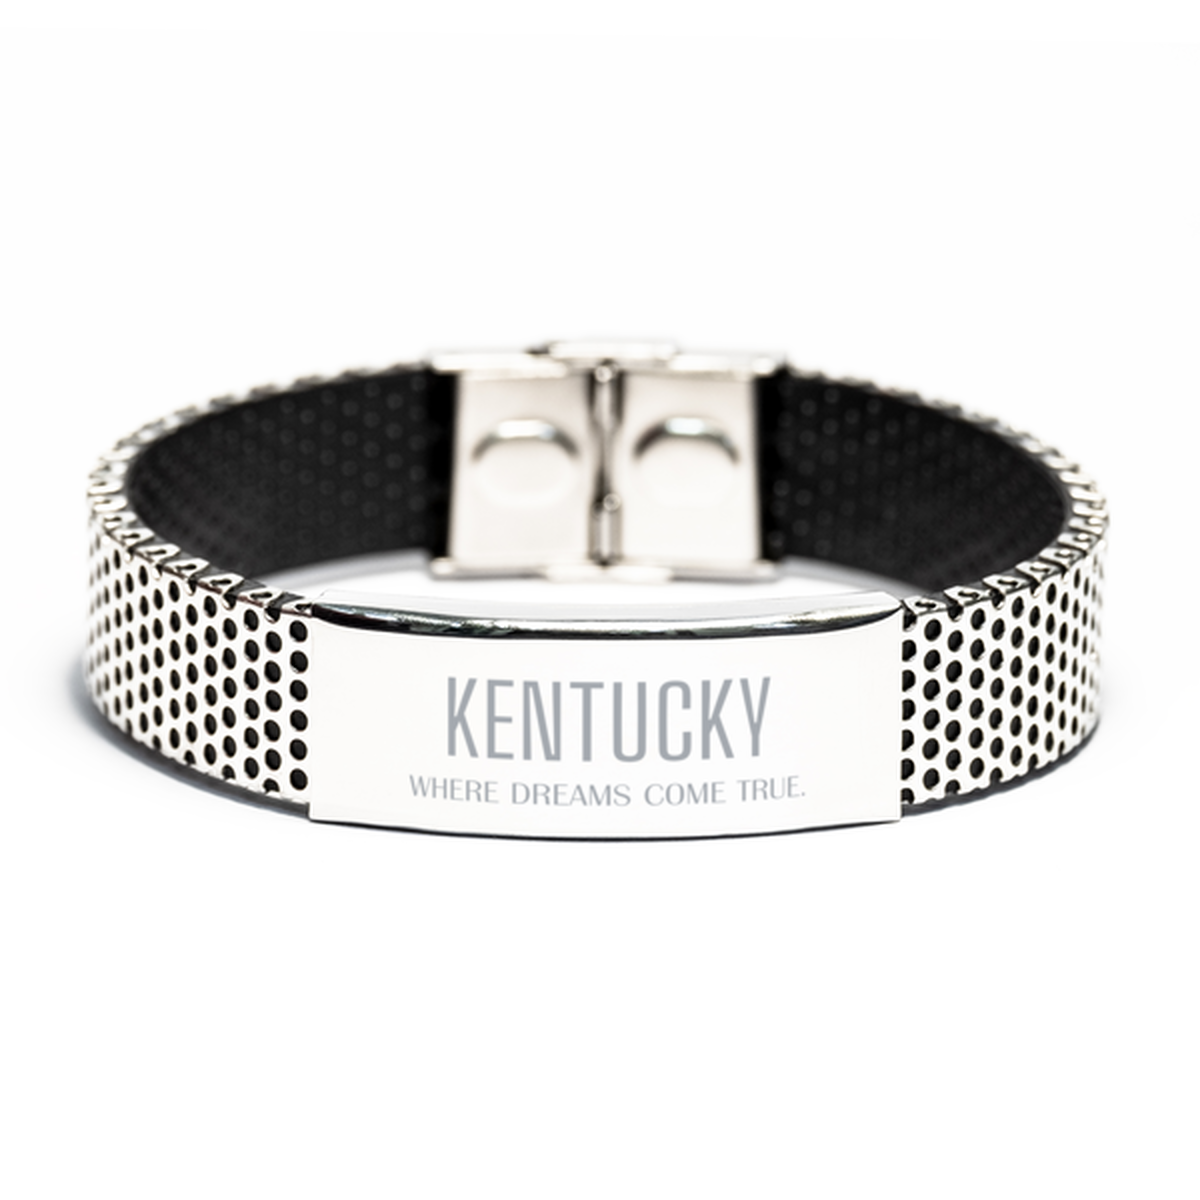 Love Kentucky State Stainless Steel Bracelet, Kentucky Where dreams come true, Birthday Inspirational Gifts For Kentucky Men, Women, Friends